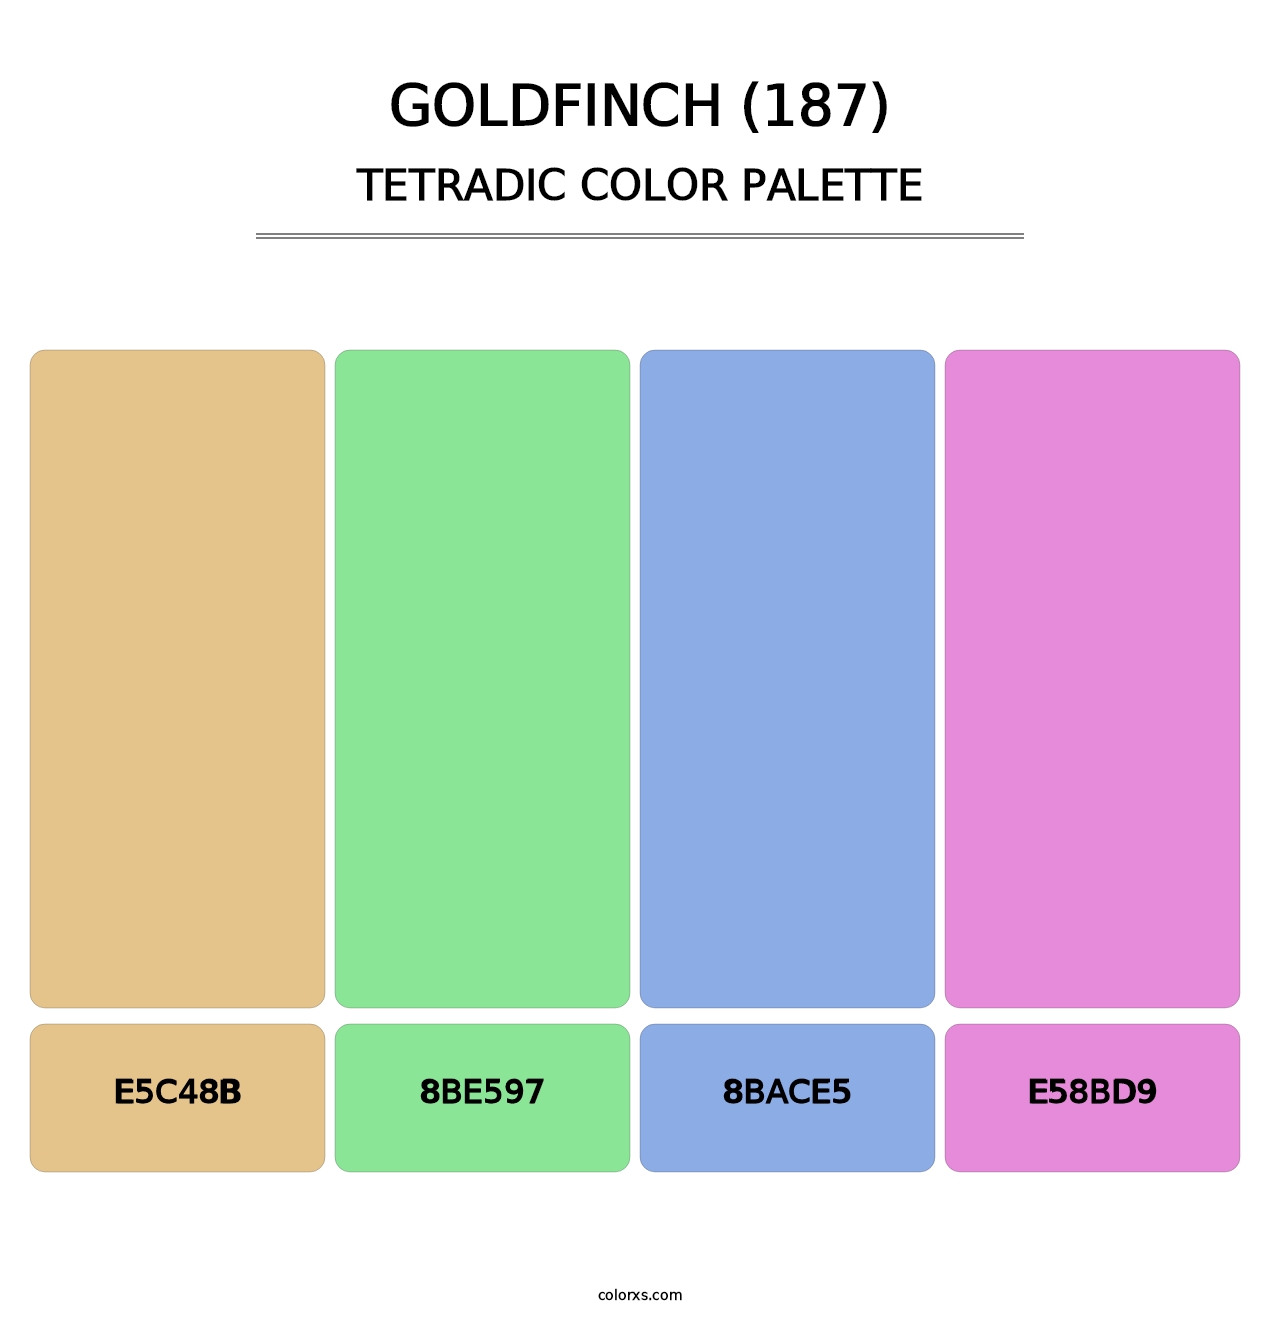 Goldfinch (187) - Tetradic Color Palette